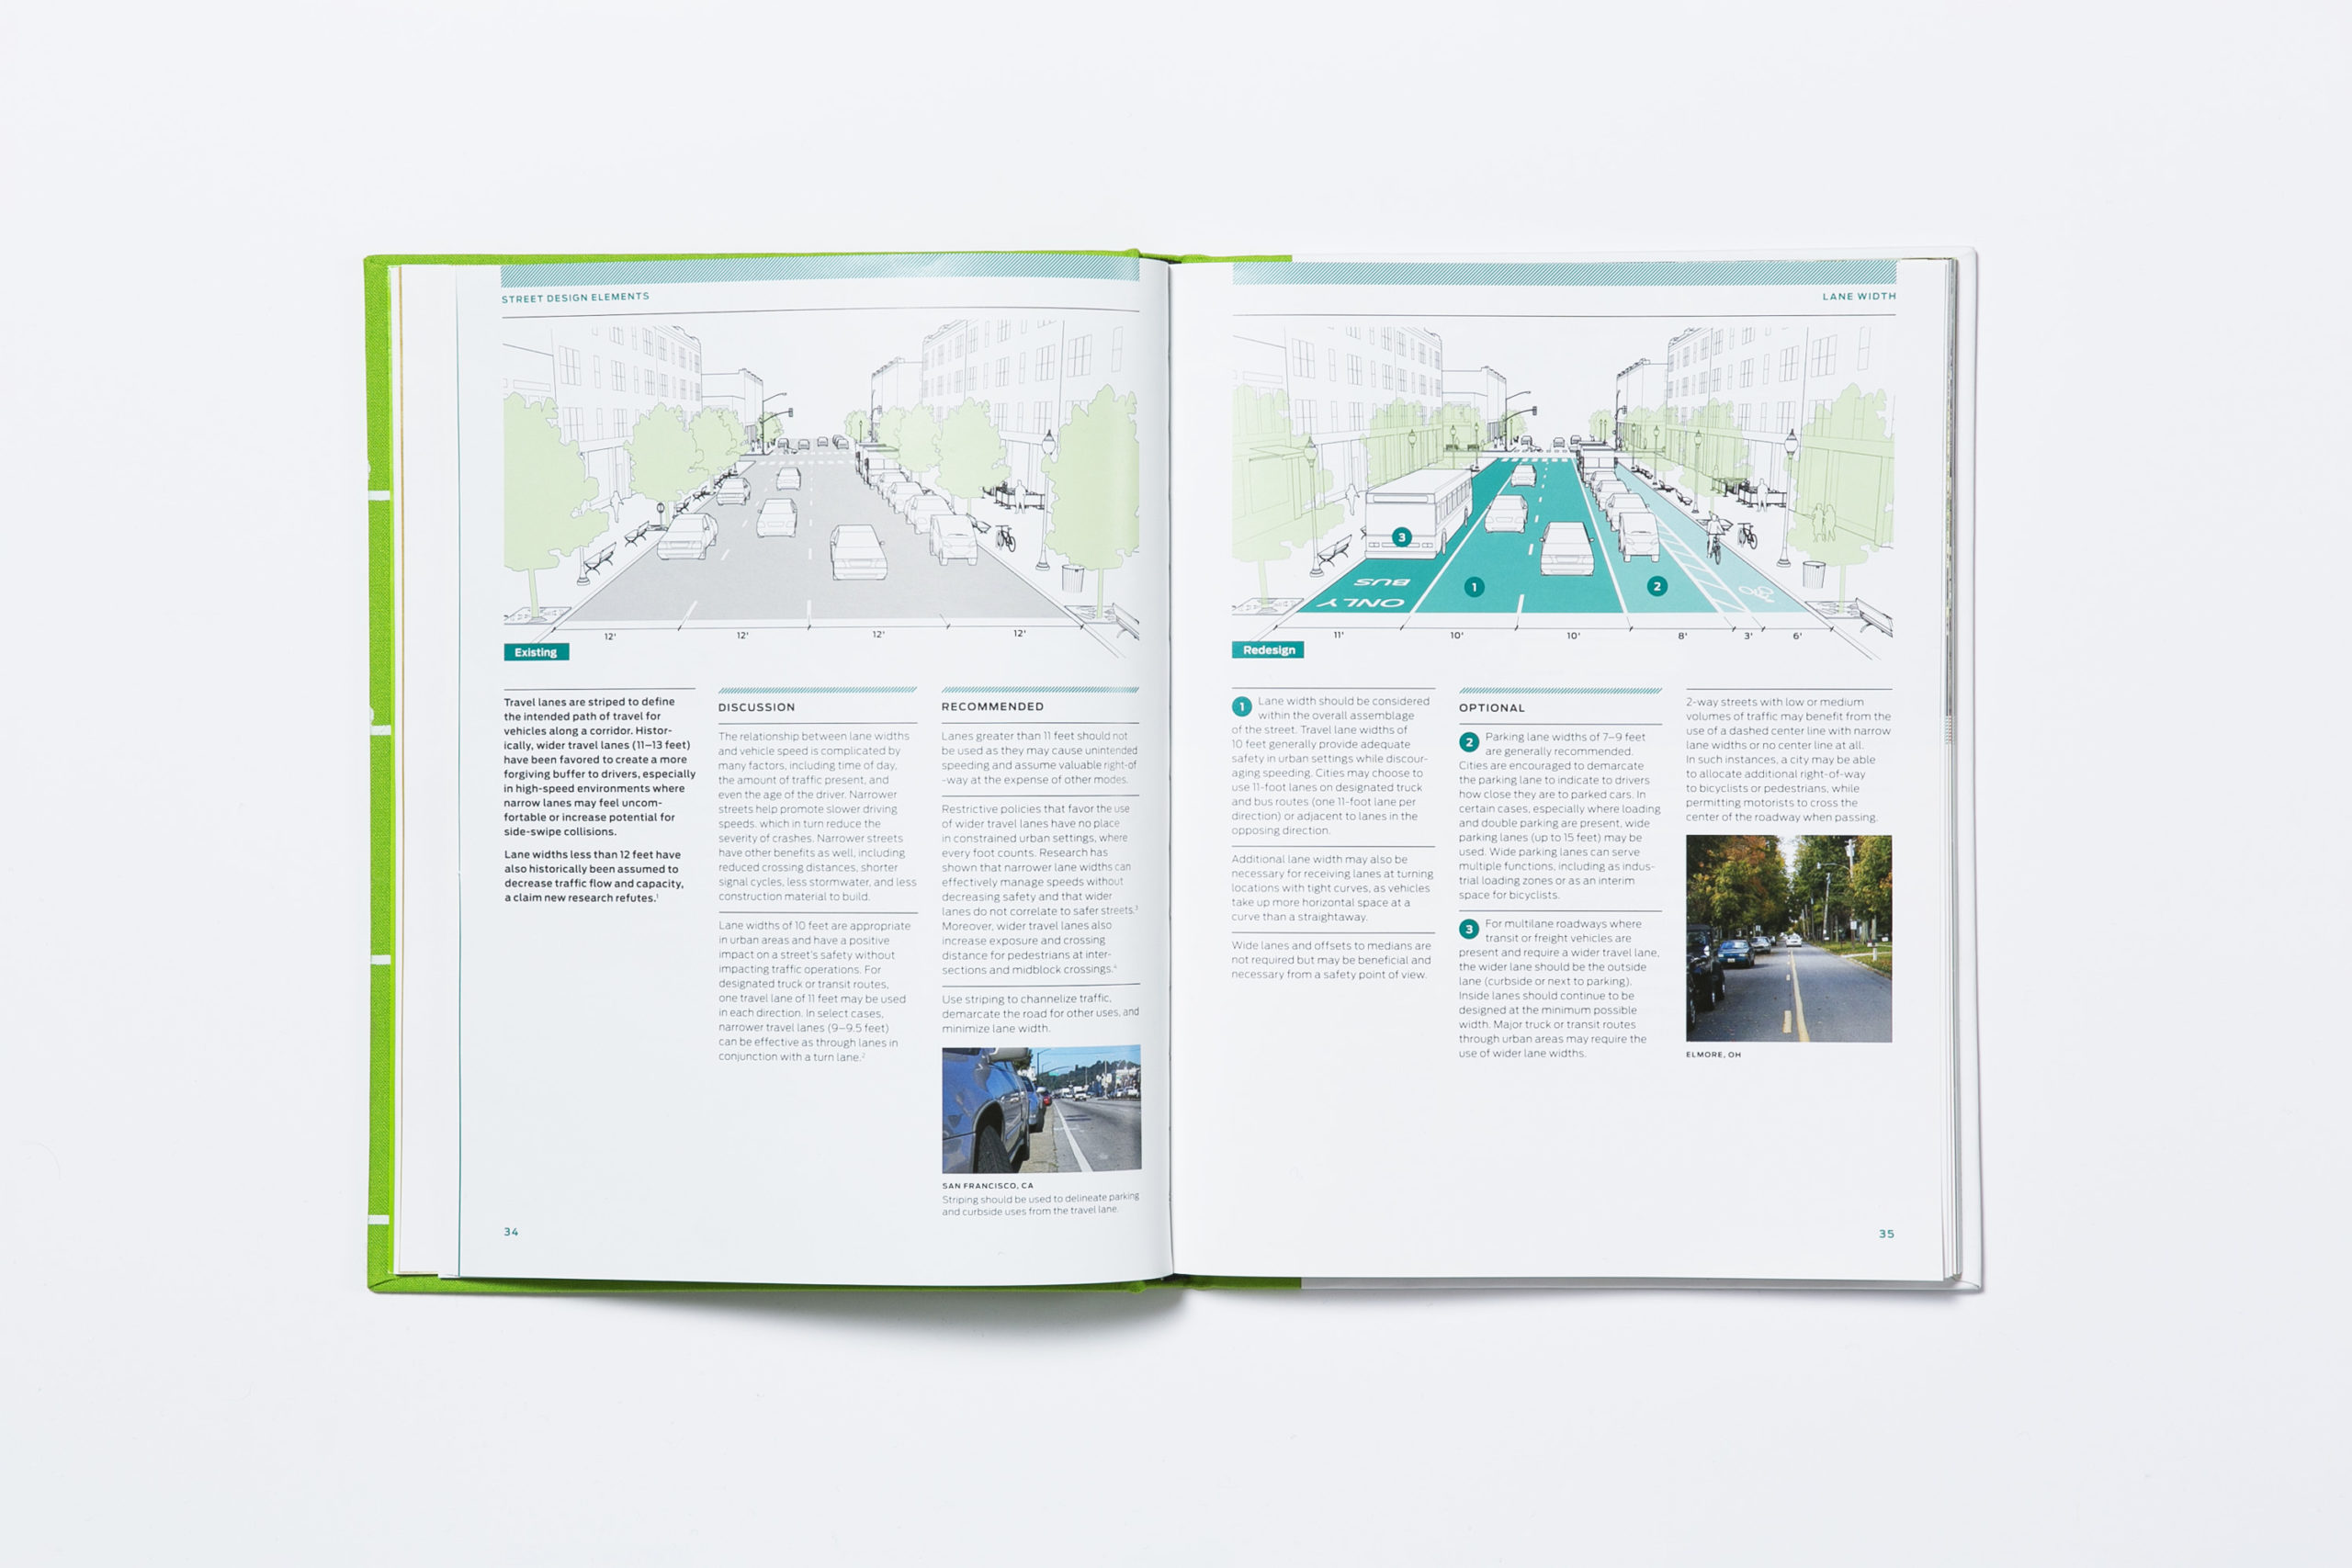 Urban Street Design Guide  National Association of City Transportation  Officials